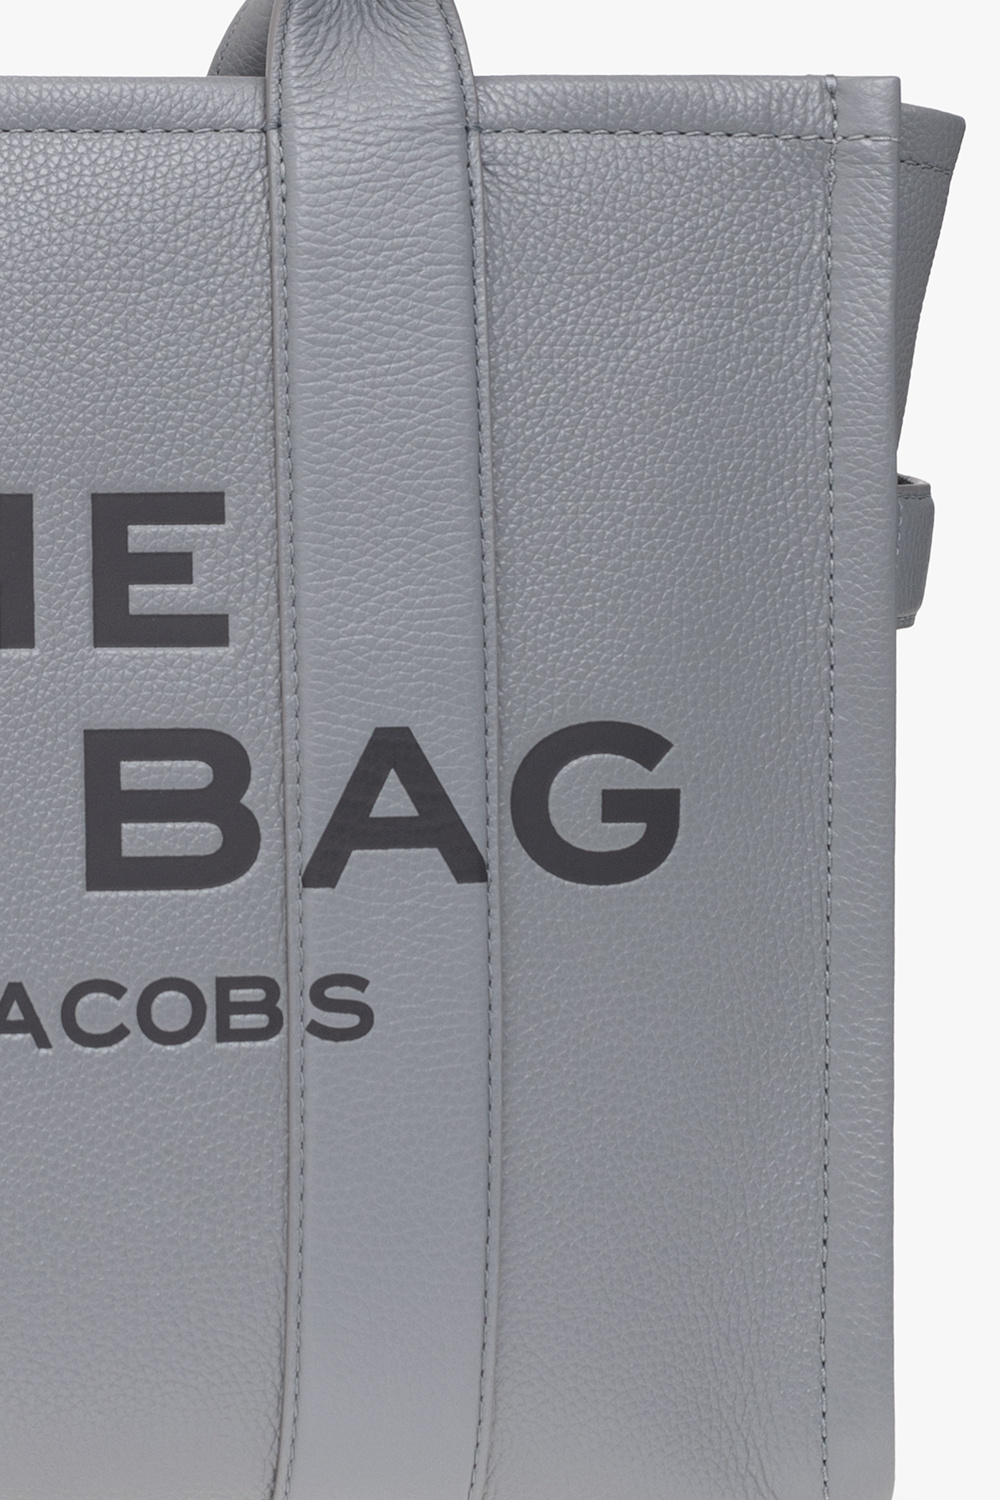 Marc Jacobs ‘The Tote Large’ Bleu bag